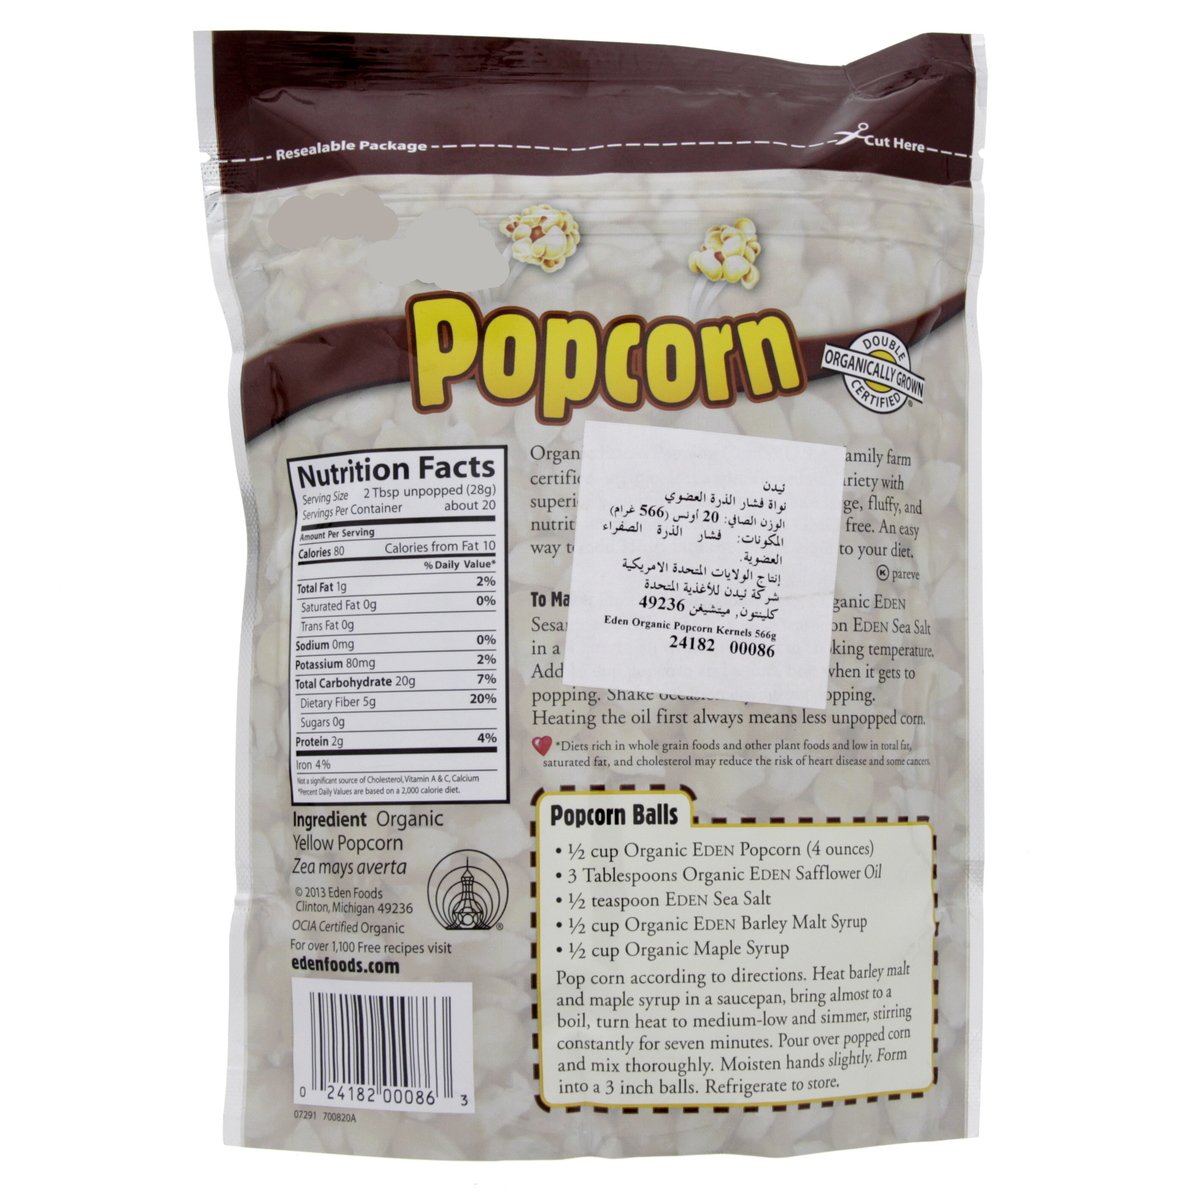 Eden Organic Popcorn Kernels 566 g